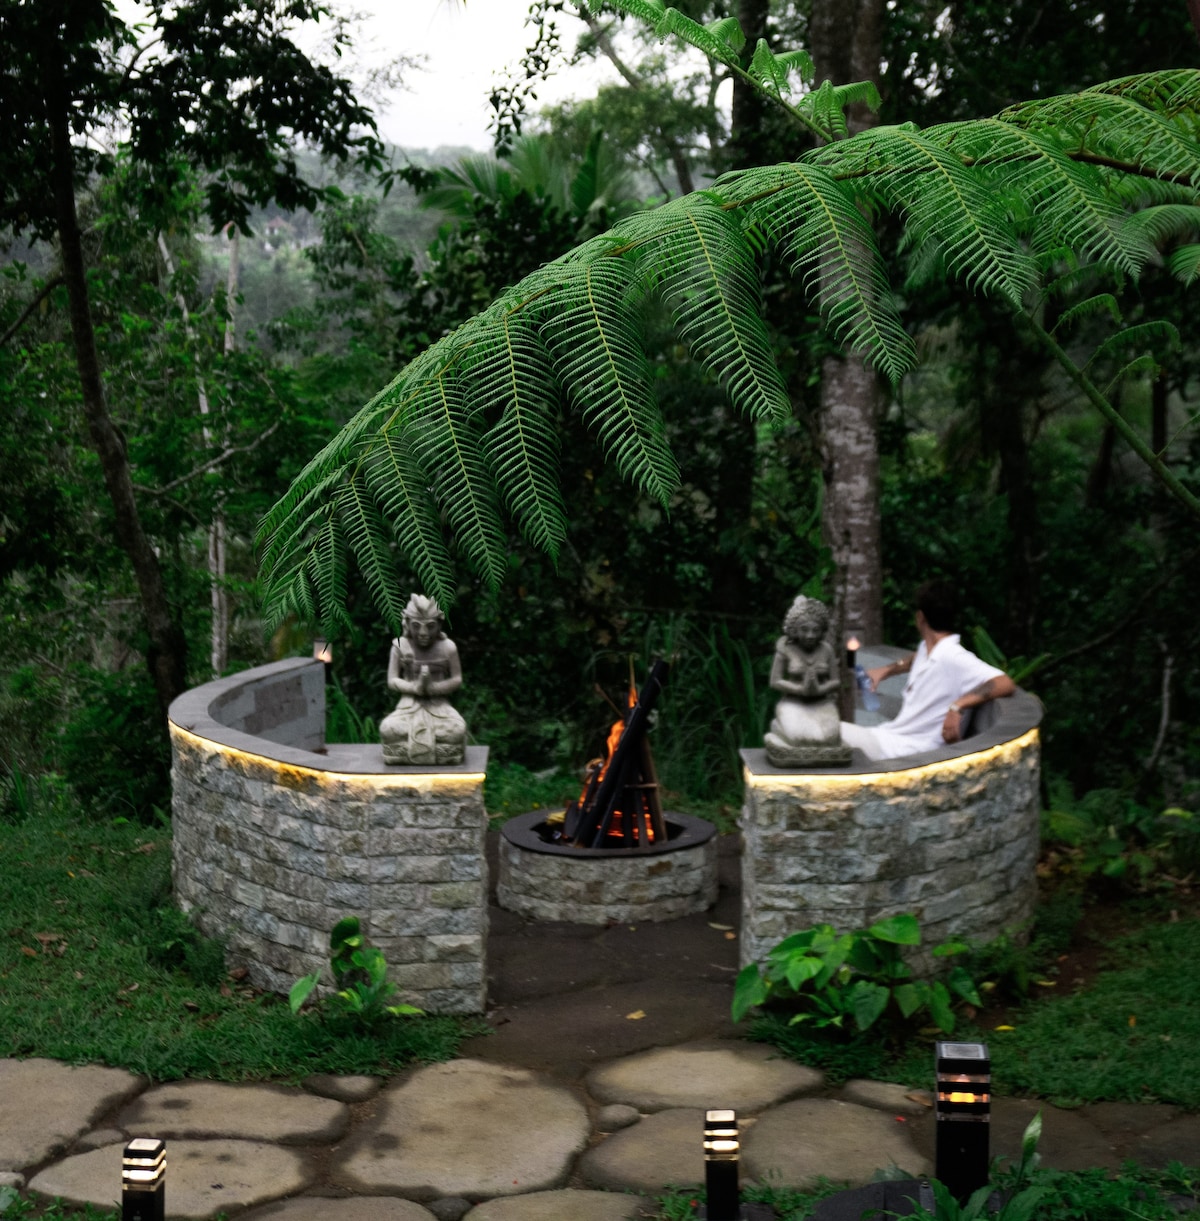 Delta Casa Ubud- Tiny Villas in Bali Jungles (DC1)